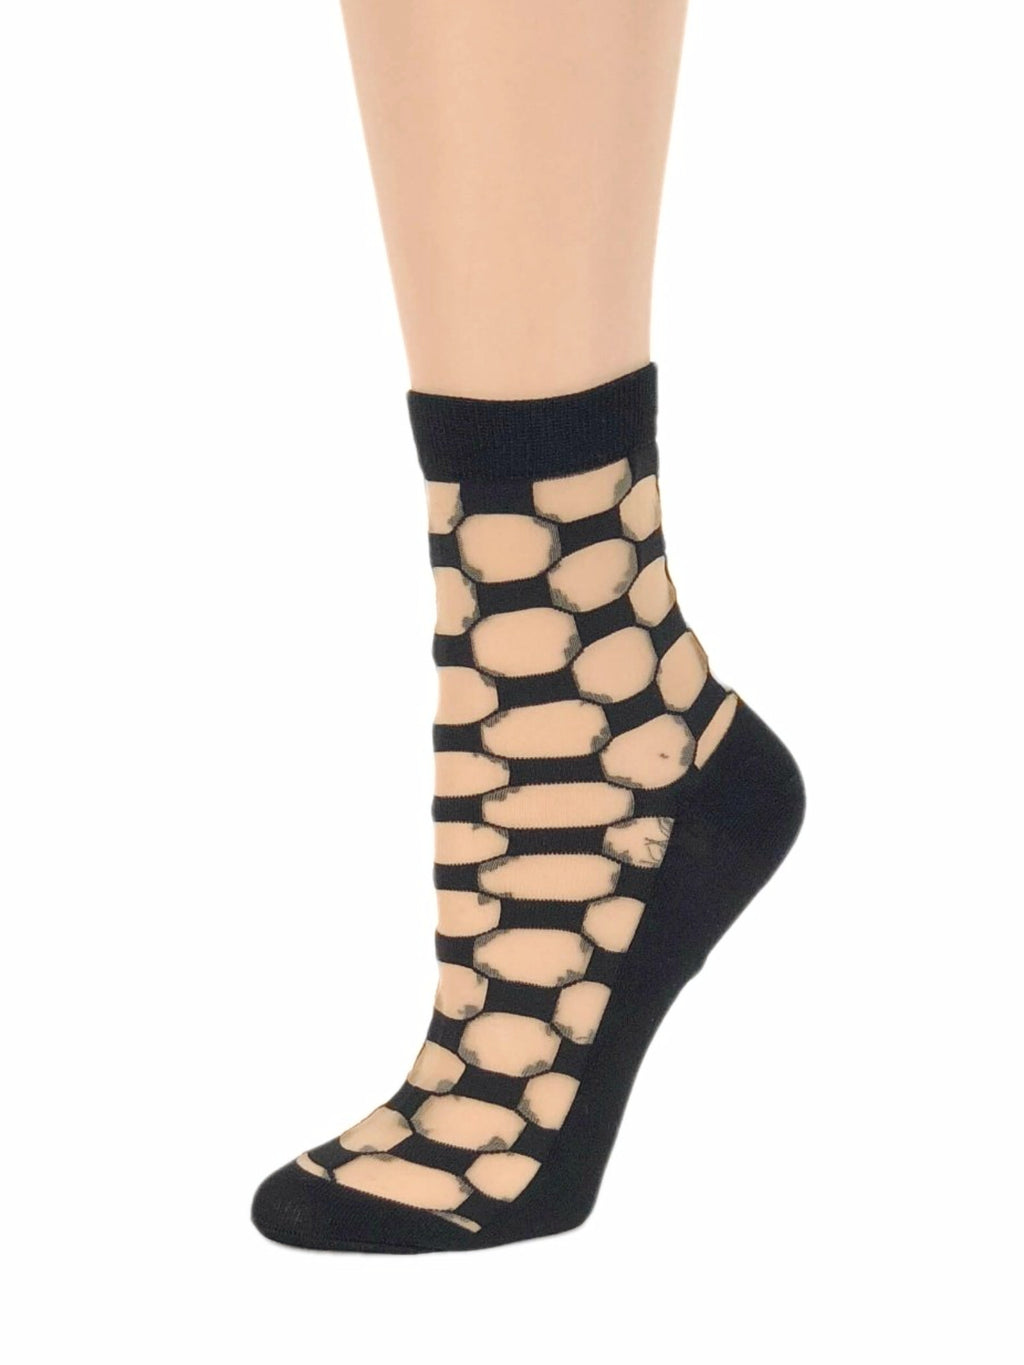 Pentagon Black Sheer Socks - Global Trendz Fashion®